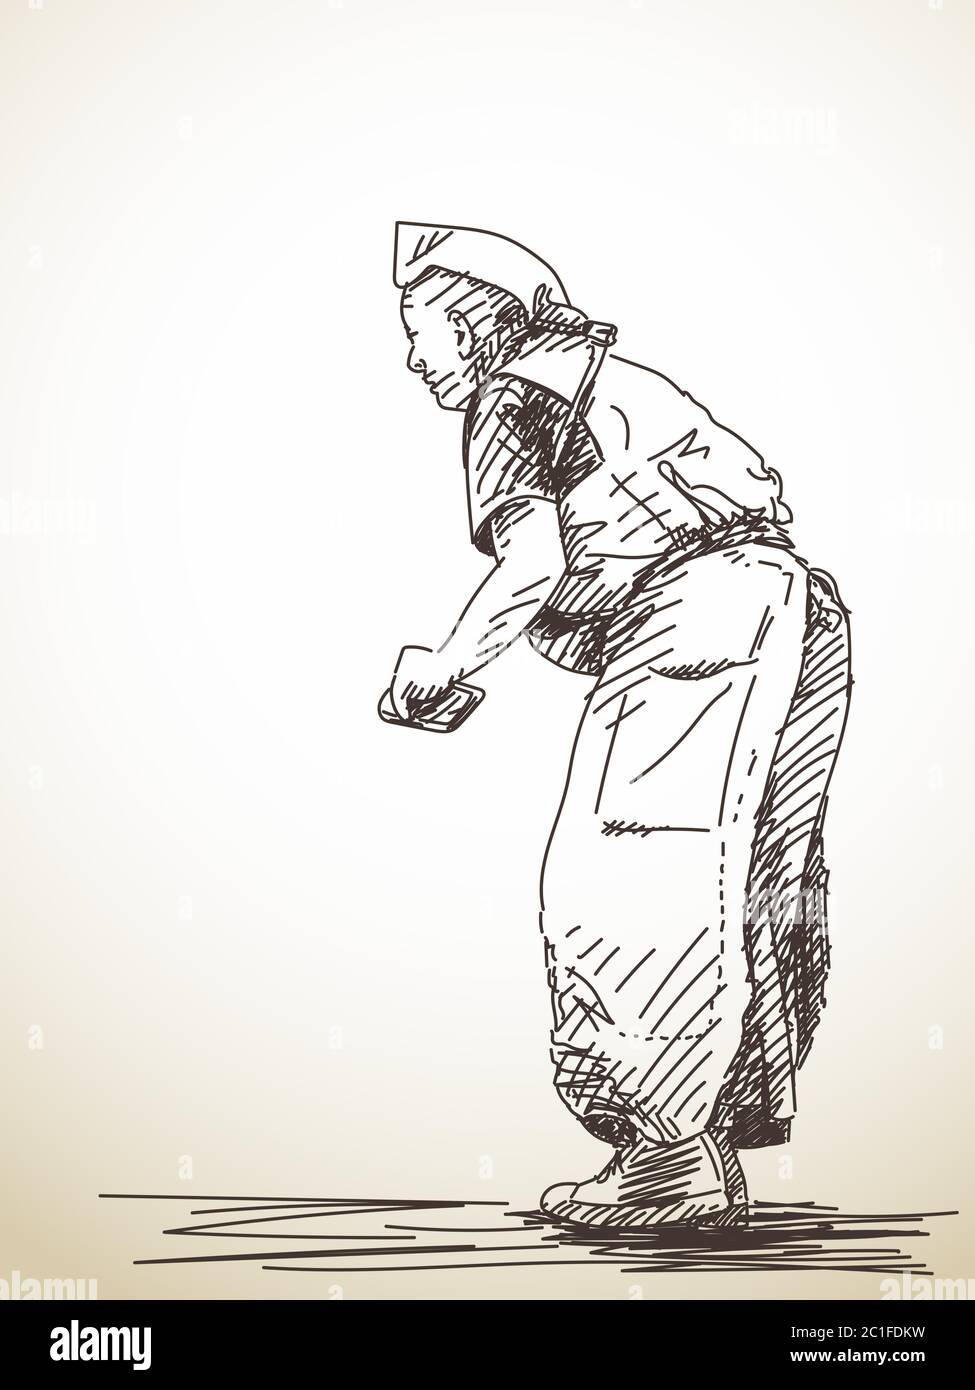 Sketch of praying buddhist man, Hand drawn illustration Stock Vector